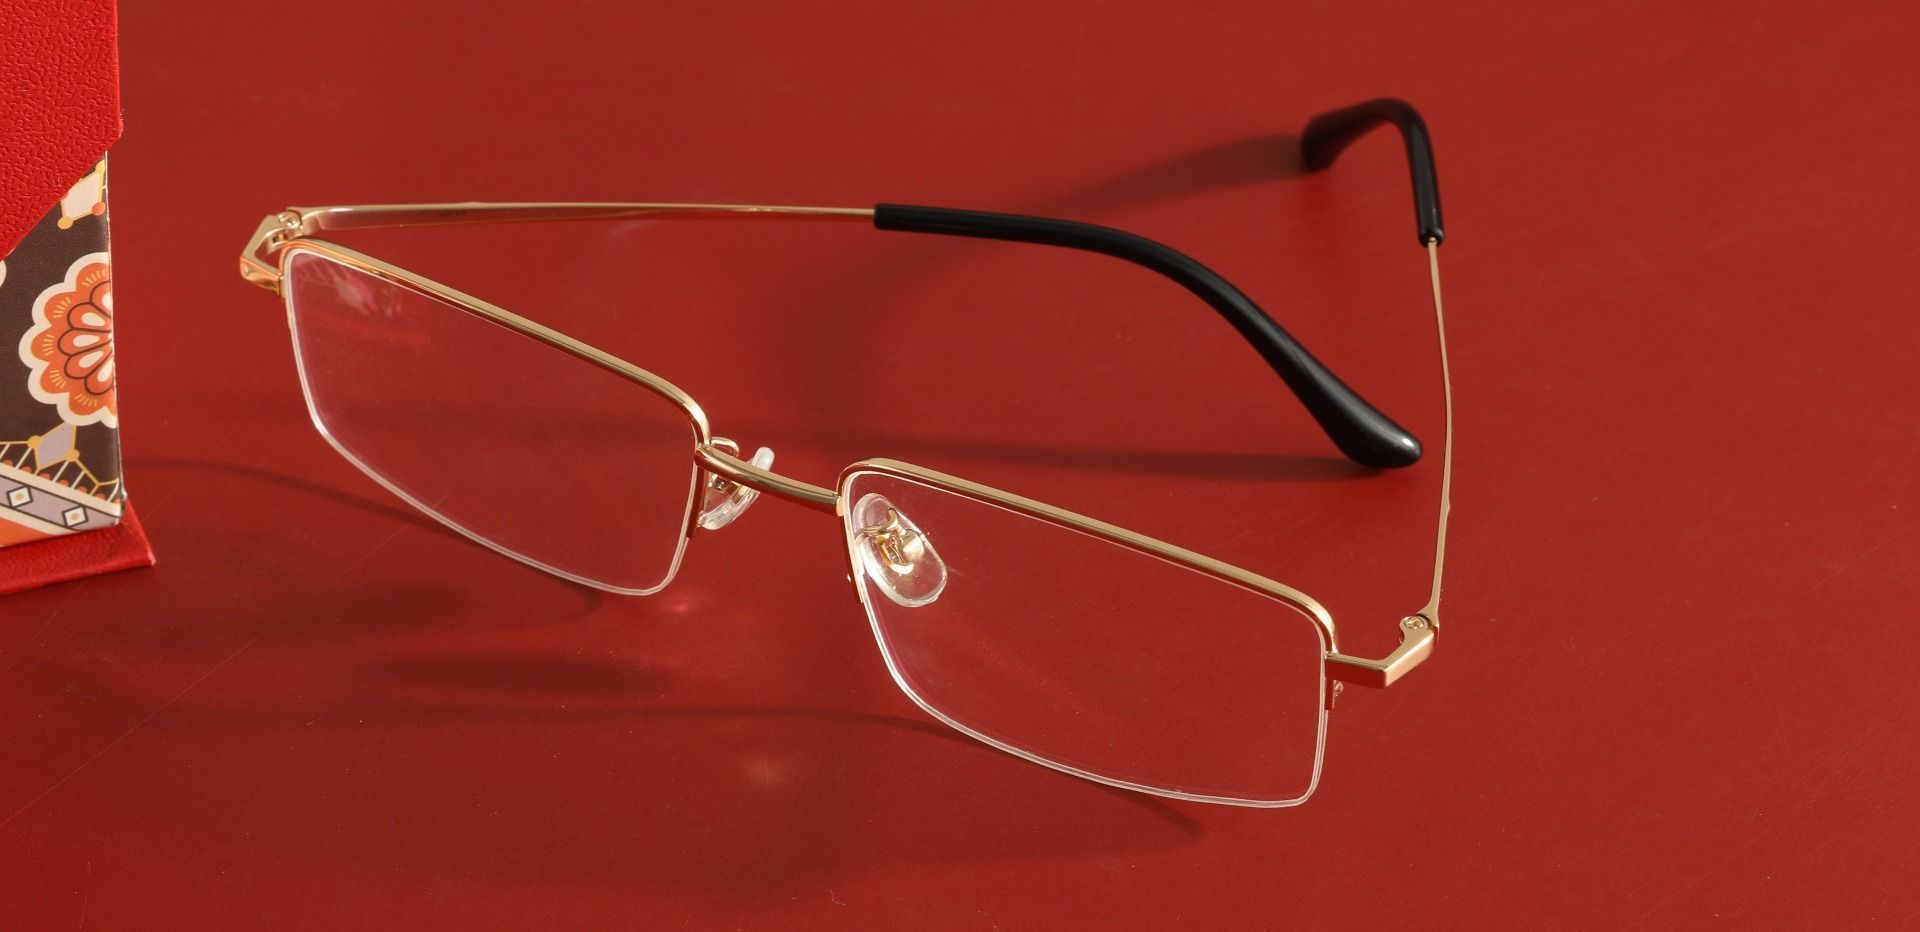 Wayne Rectangle Progressive Glasses - Gold